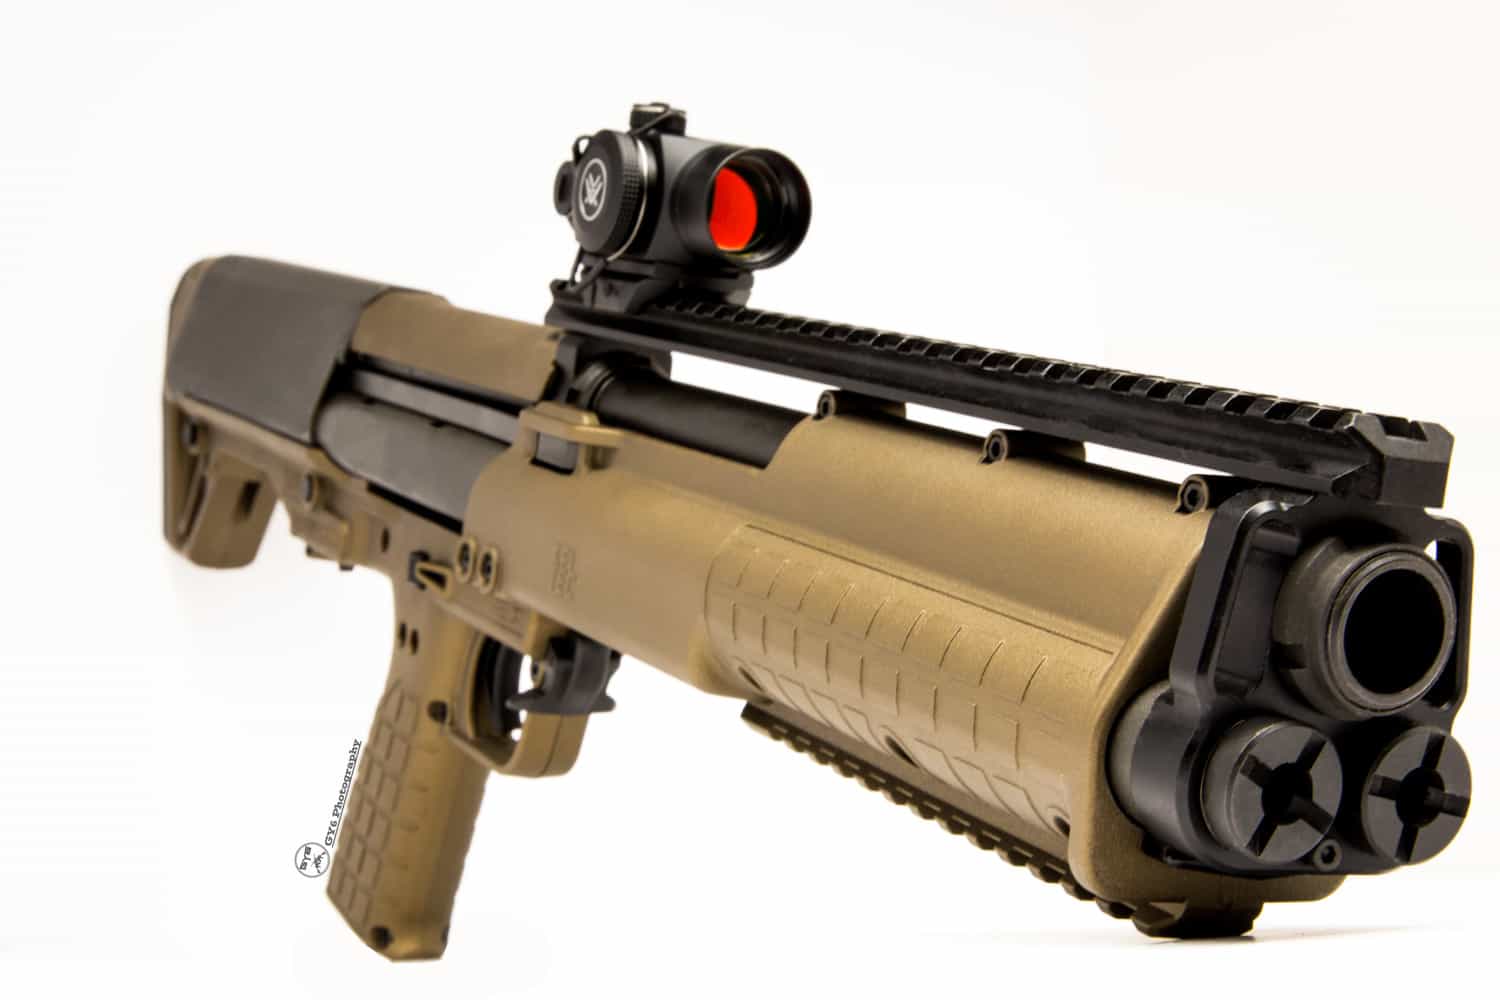 The Kel-Tec KSG Shotgun supporting a VortexOptics Sparc II Red Dot.